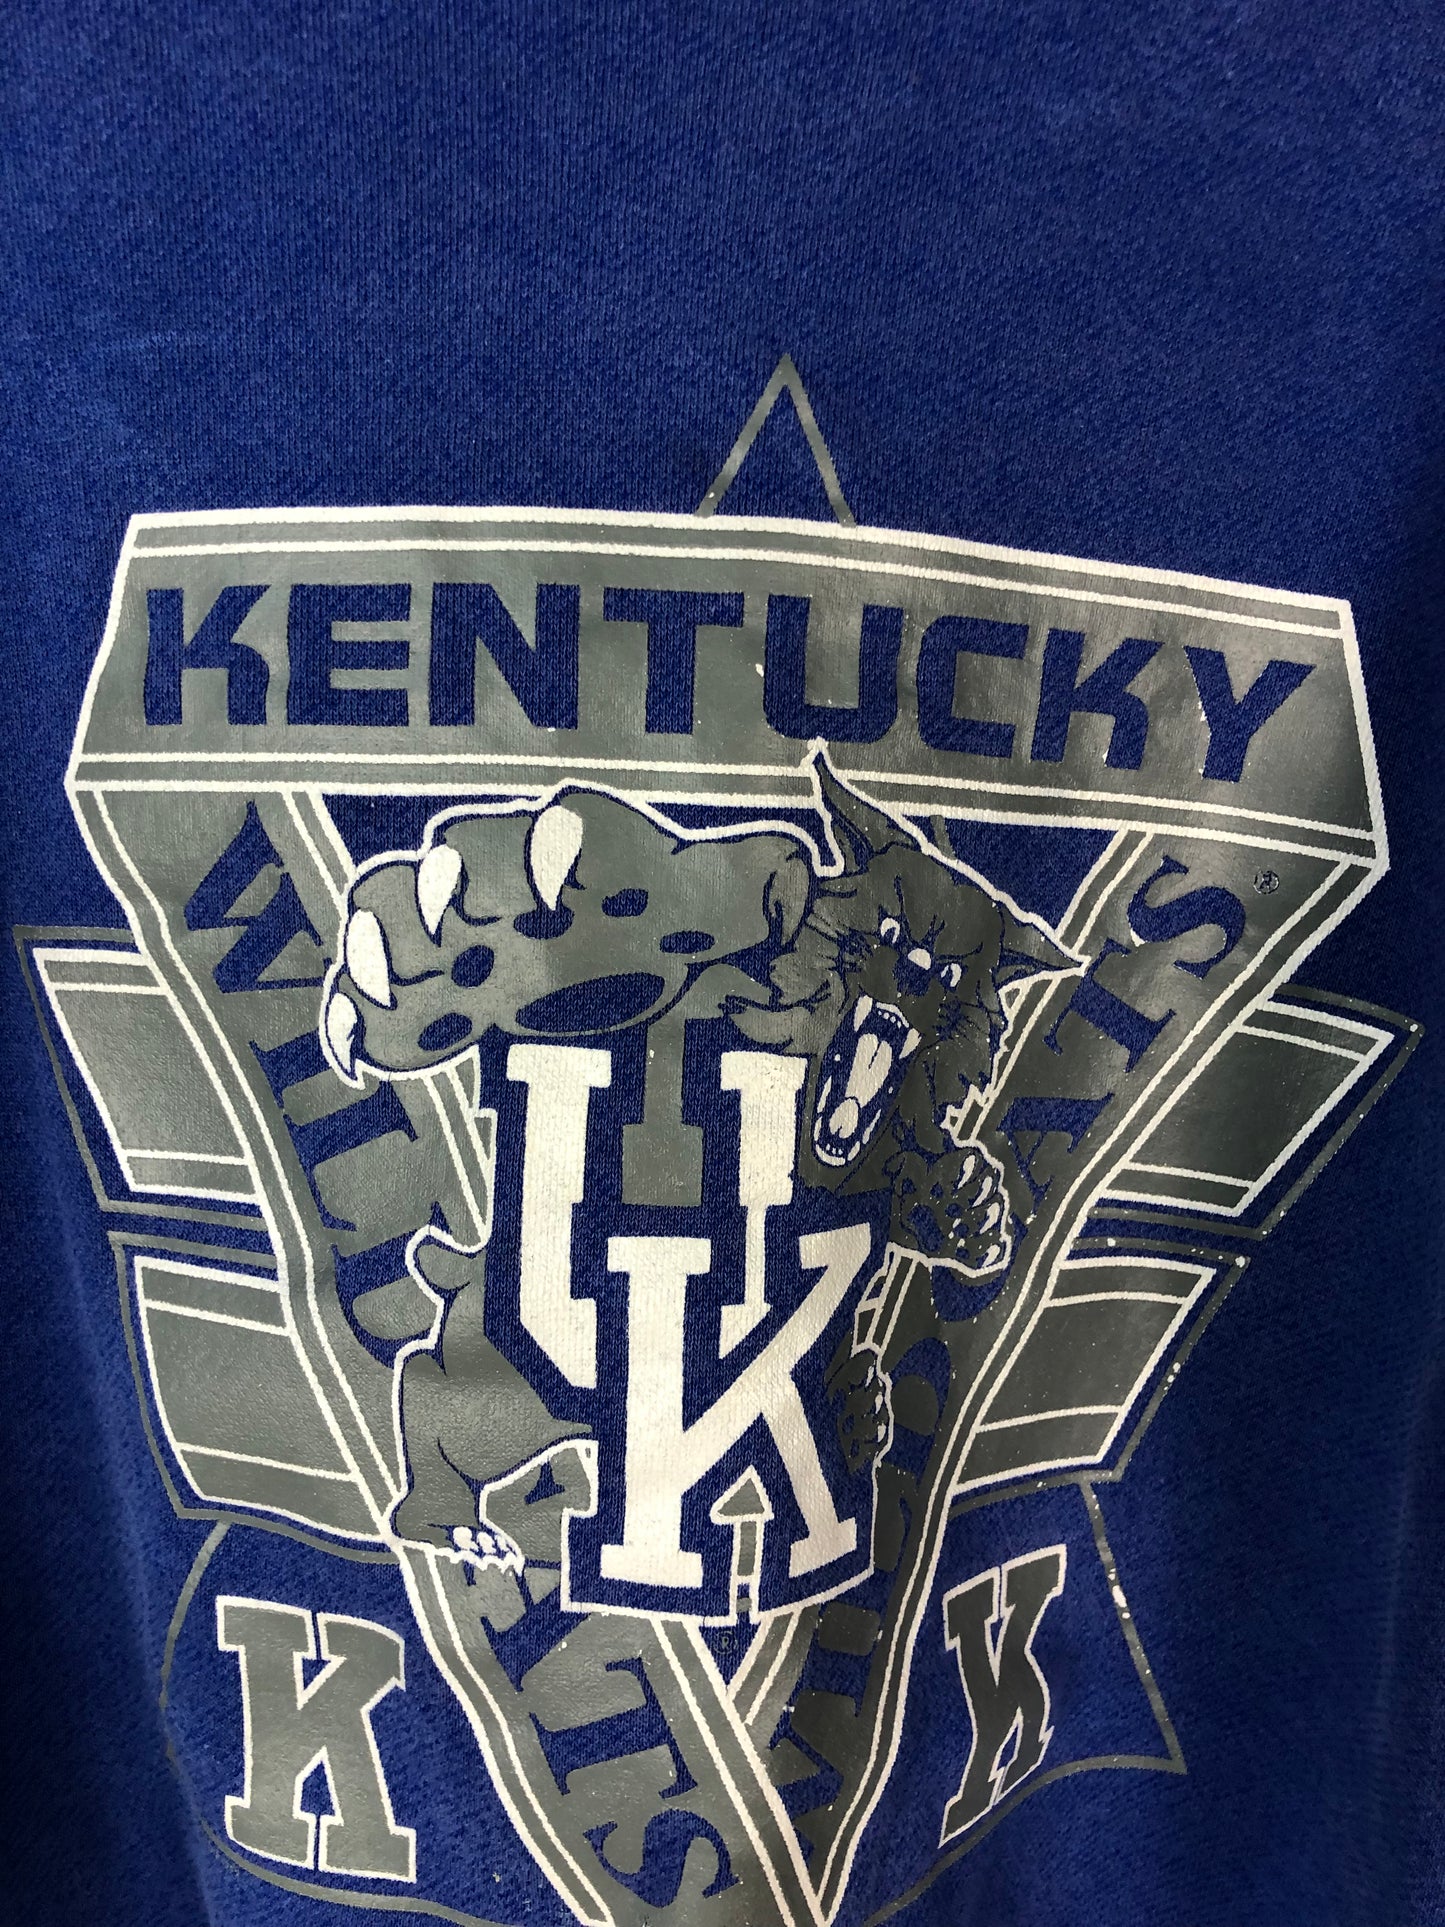 VTG Kentucky Wildcats Crewneck Sweater Sz S